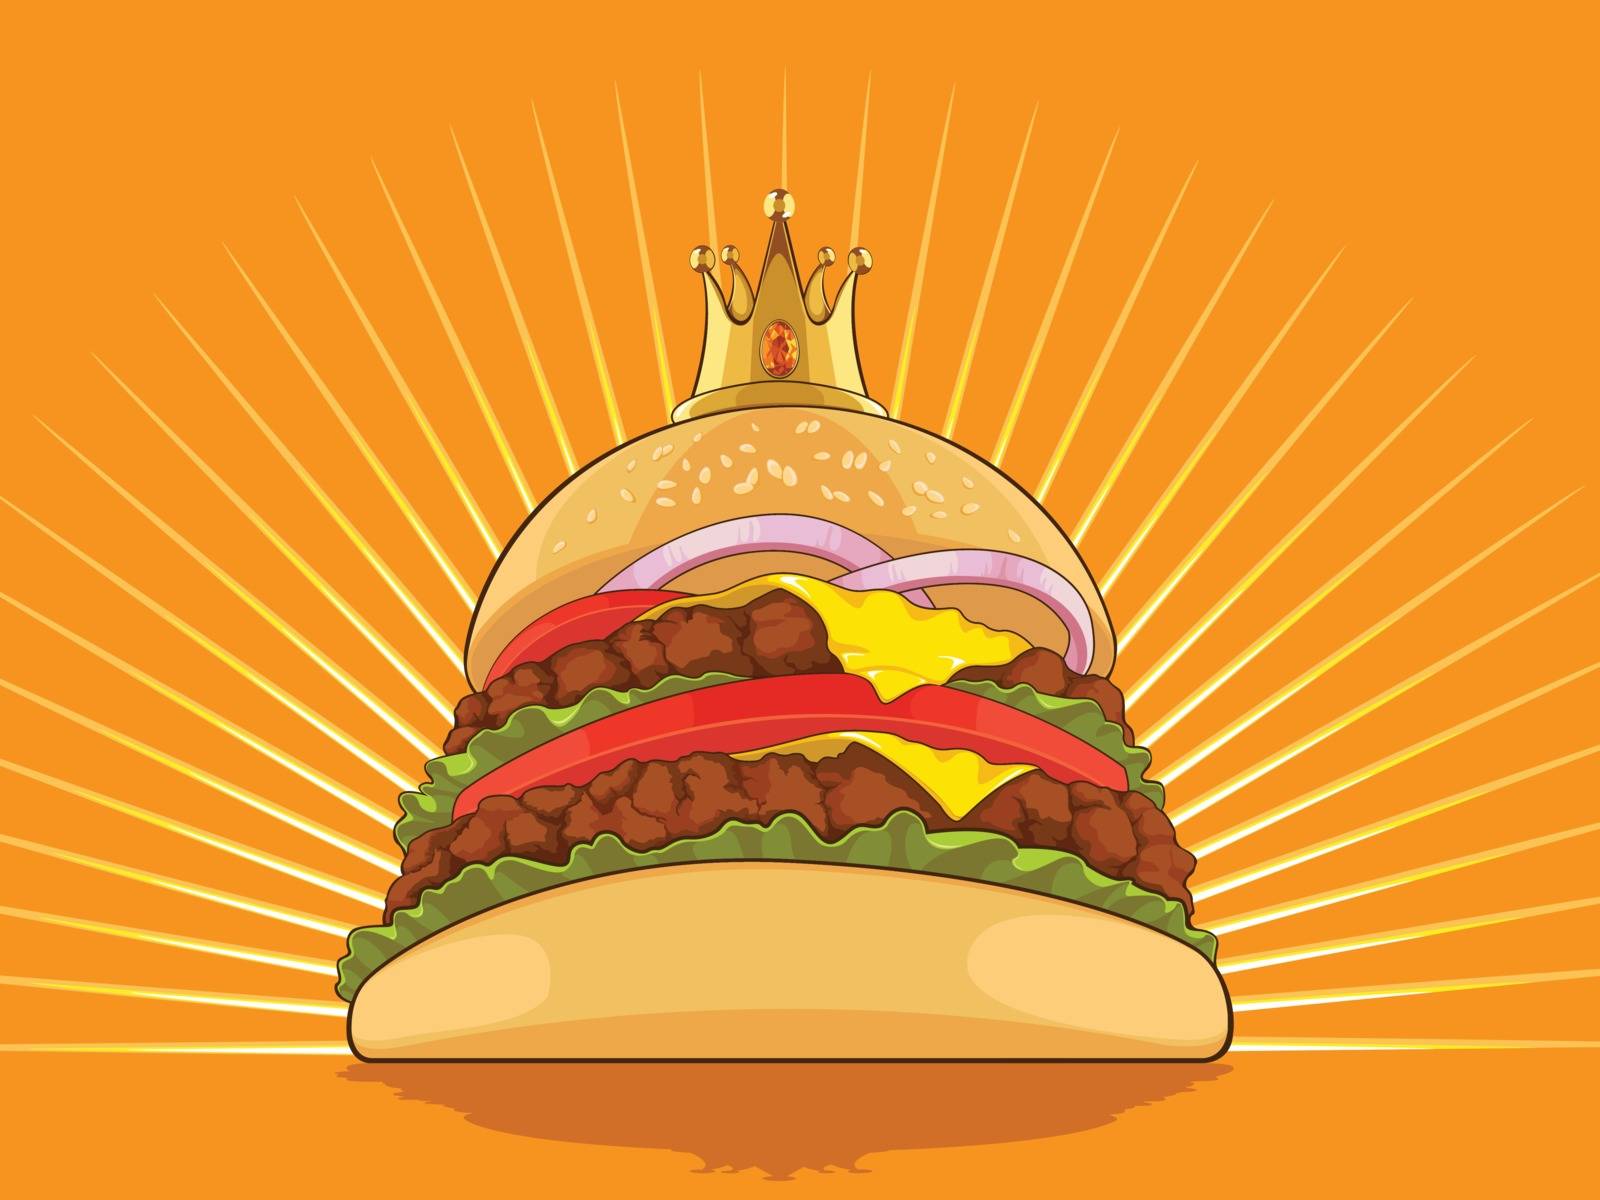 King Burger by BluezAce